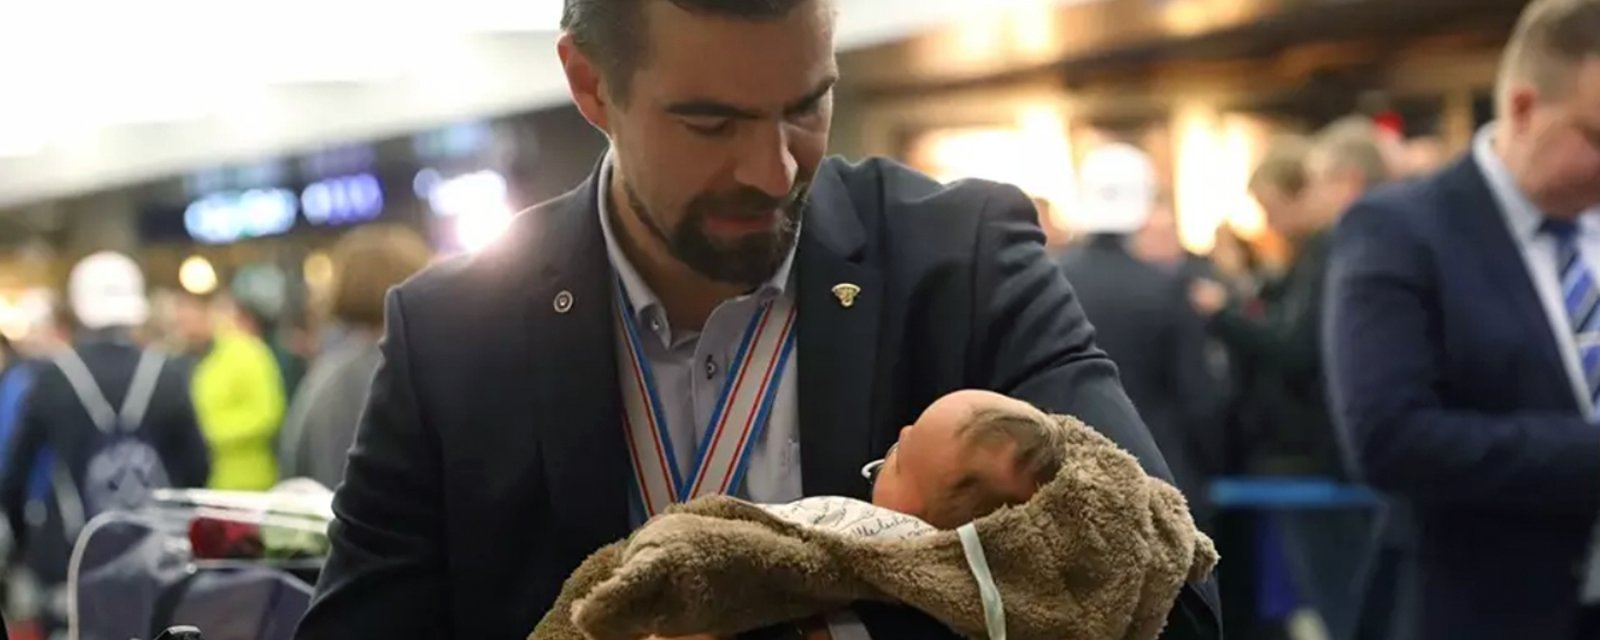 Finnish head coach to use World Junior Championship trophy for newborn son’s baptism